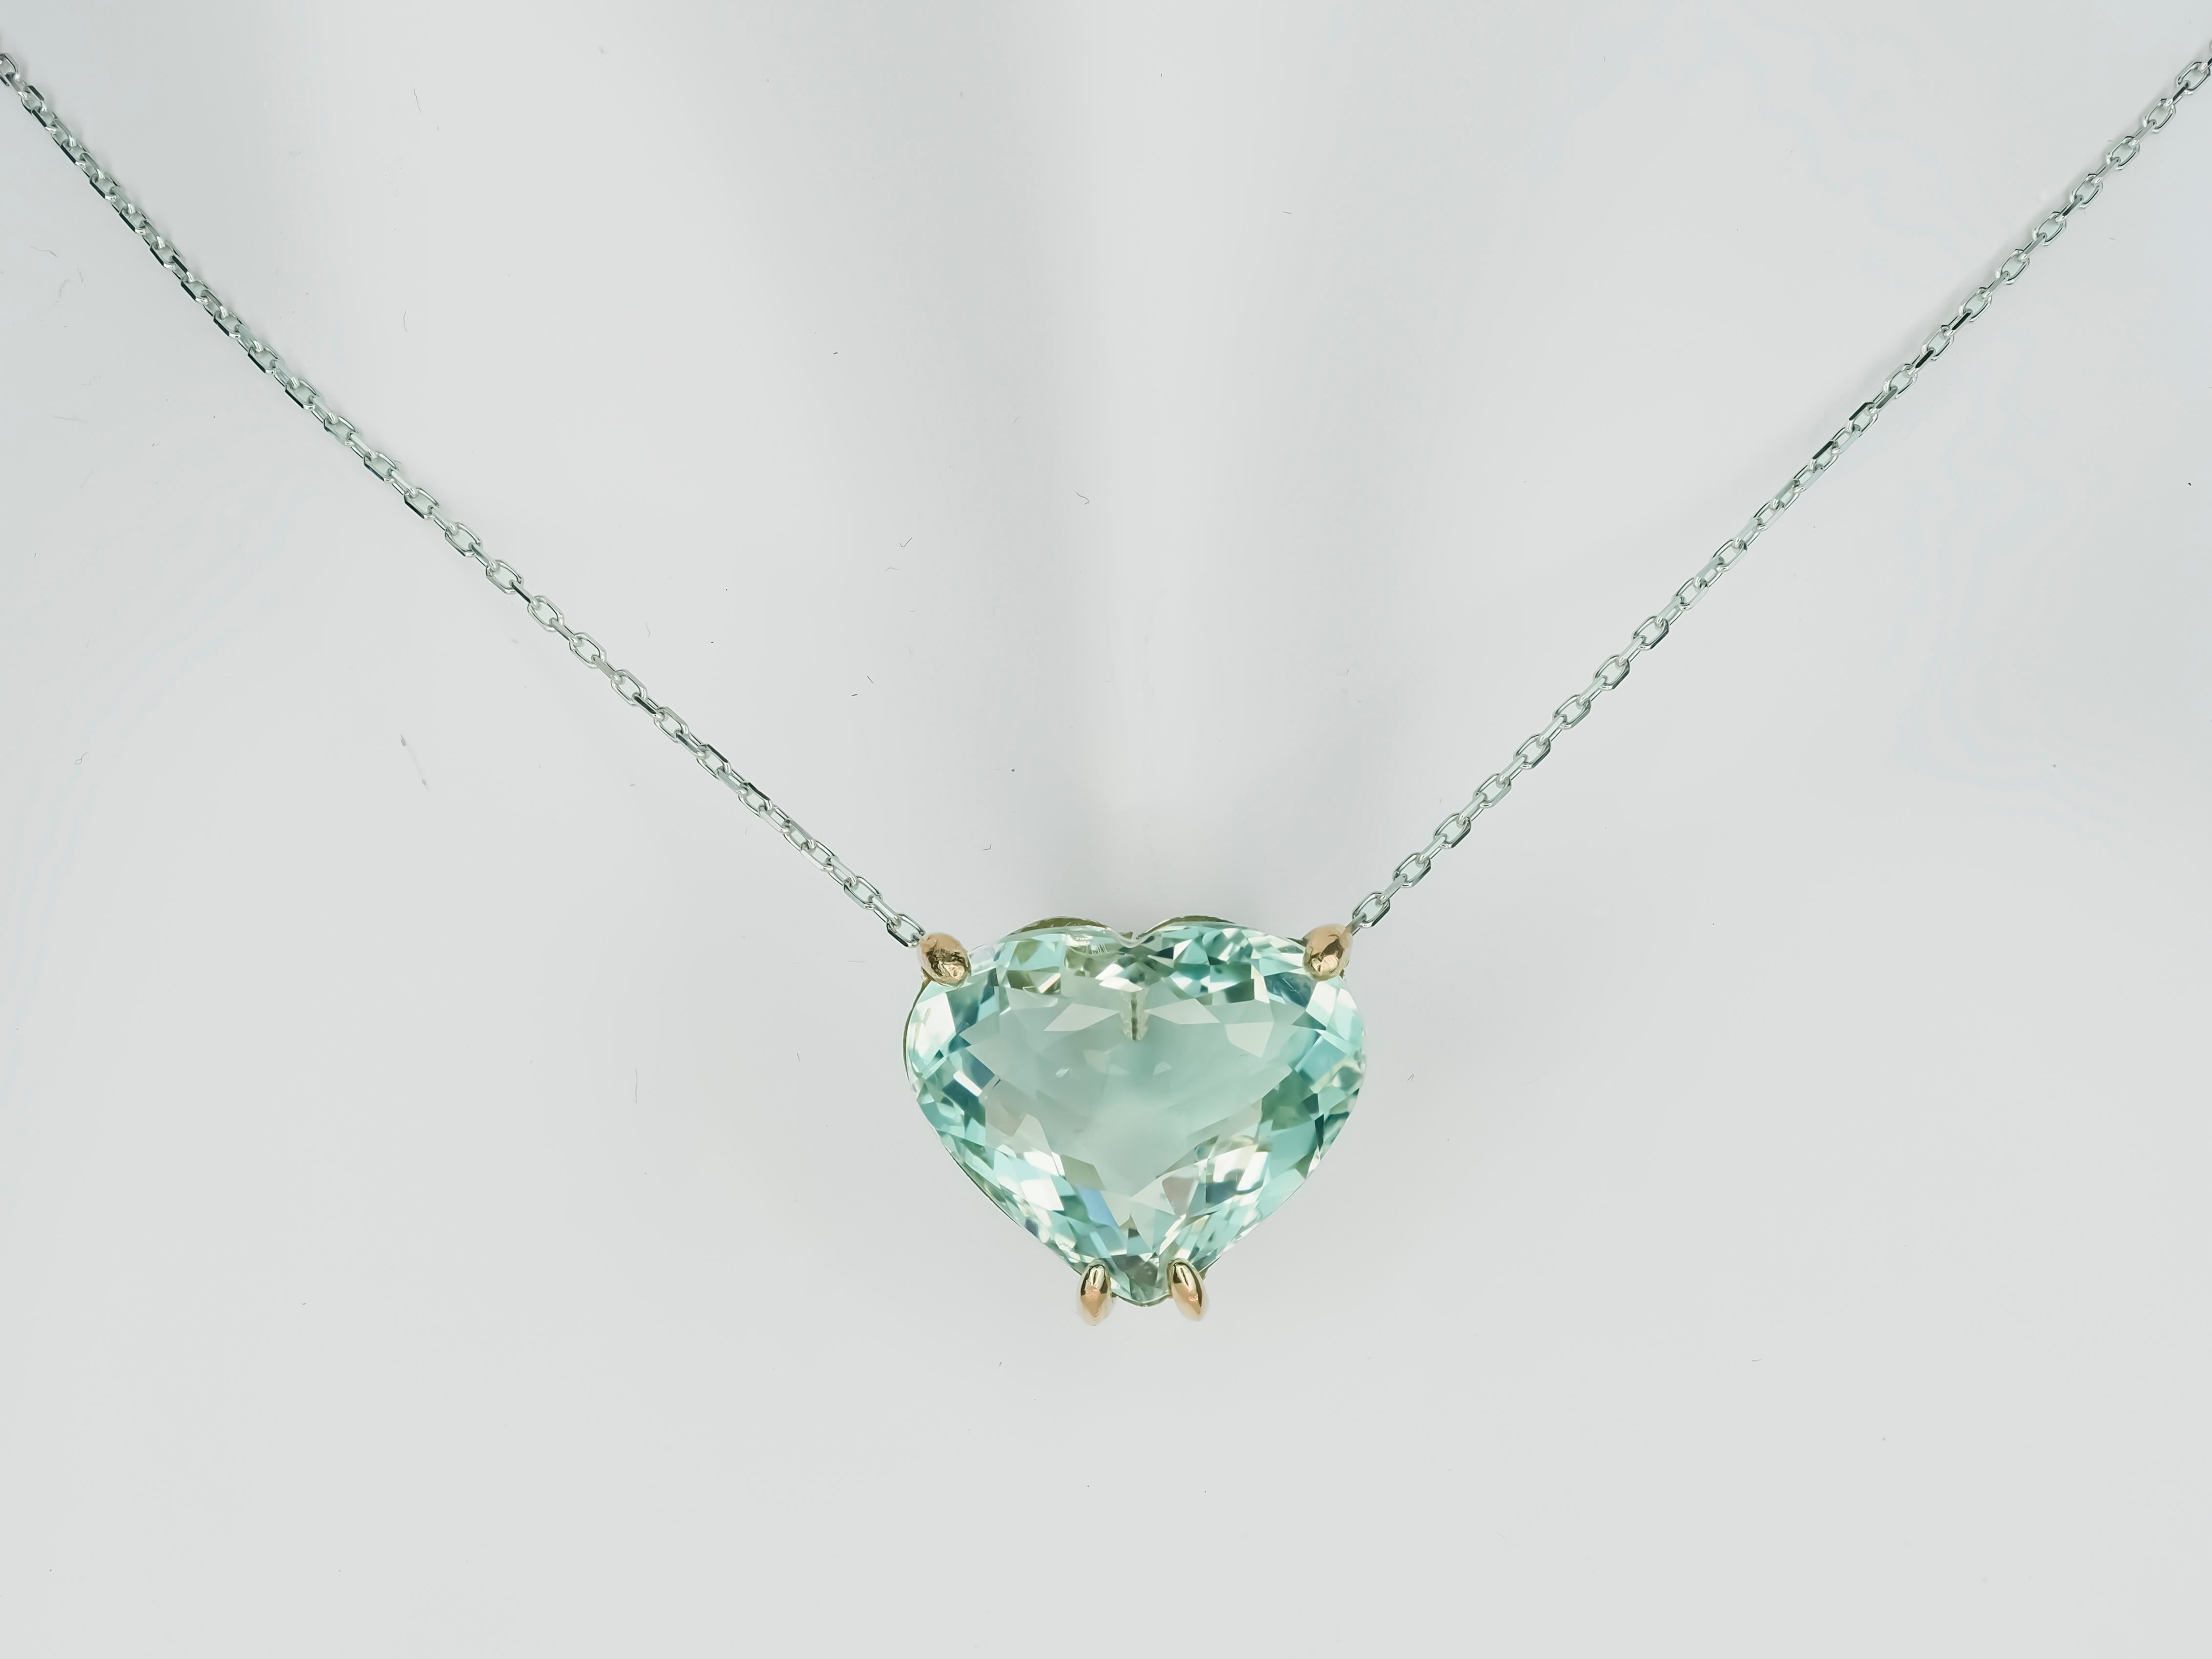 Heart Shaped Aquamarine Pendant Necklace in 14k White Gold 5